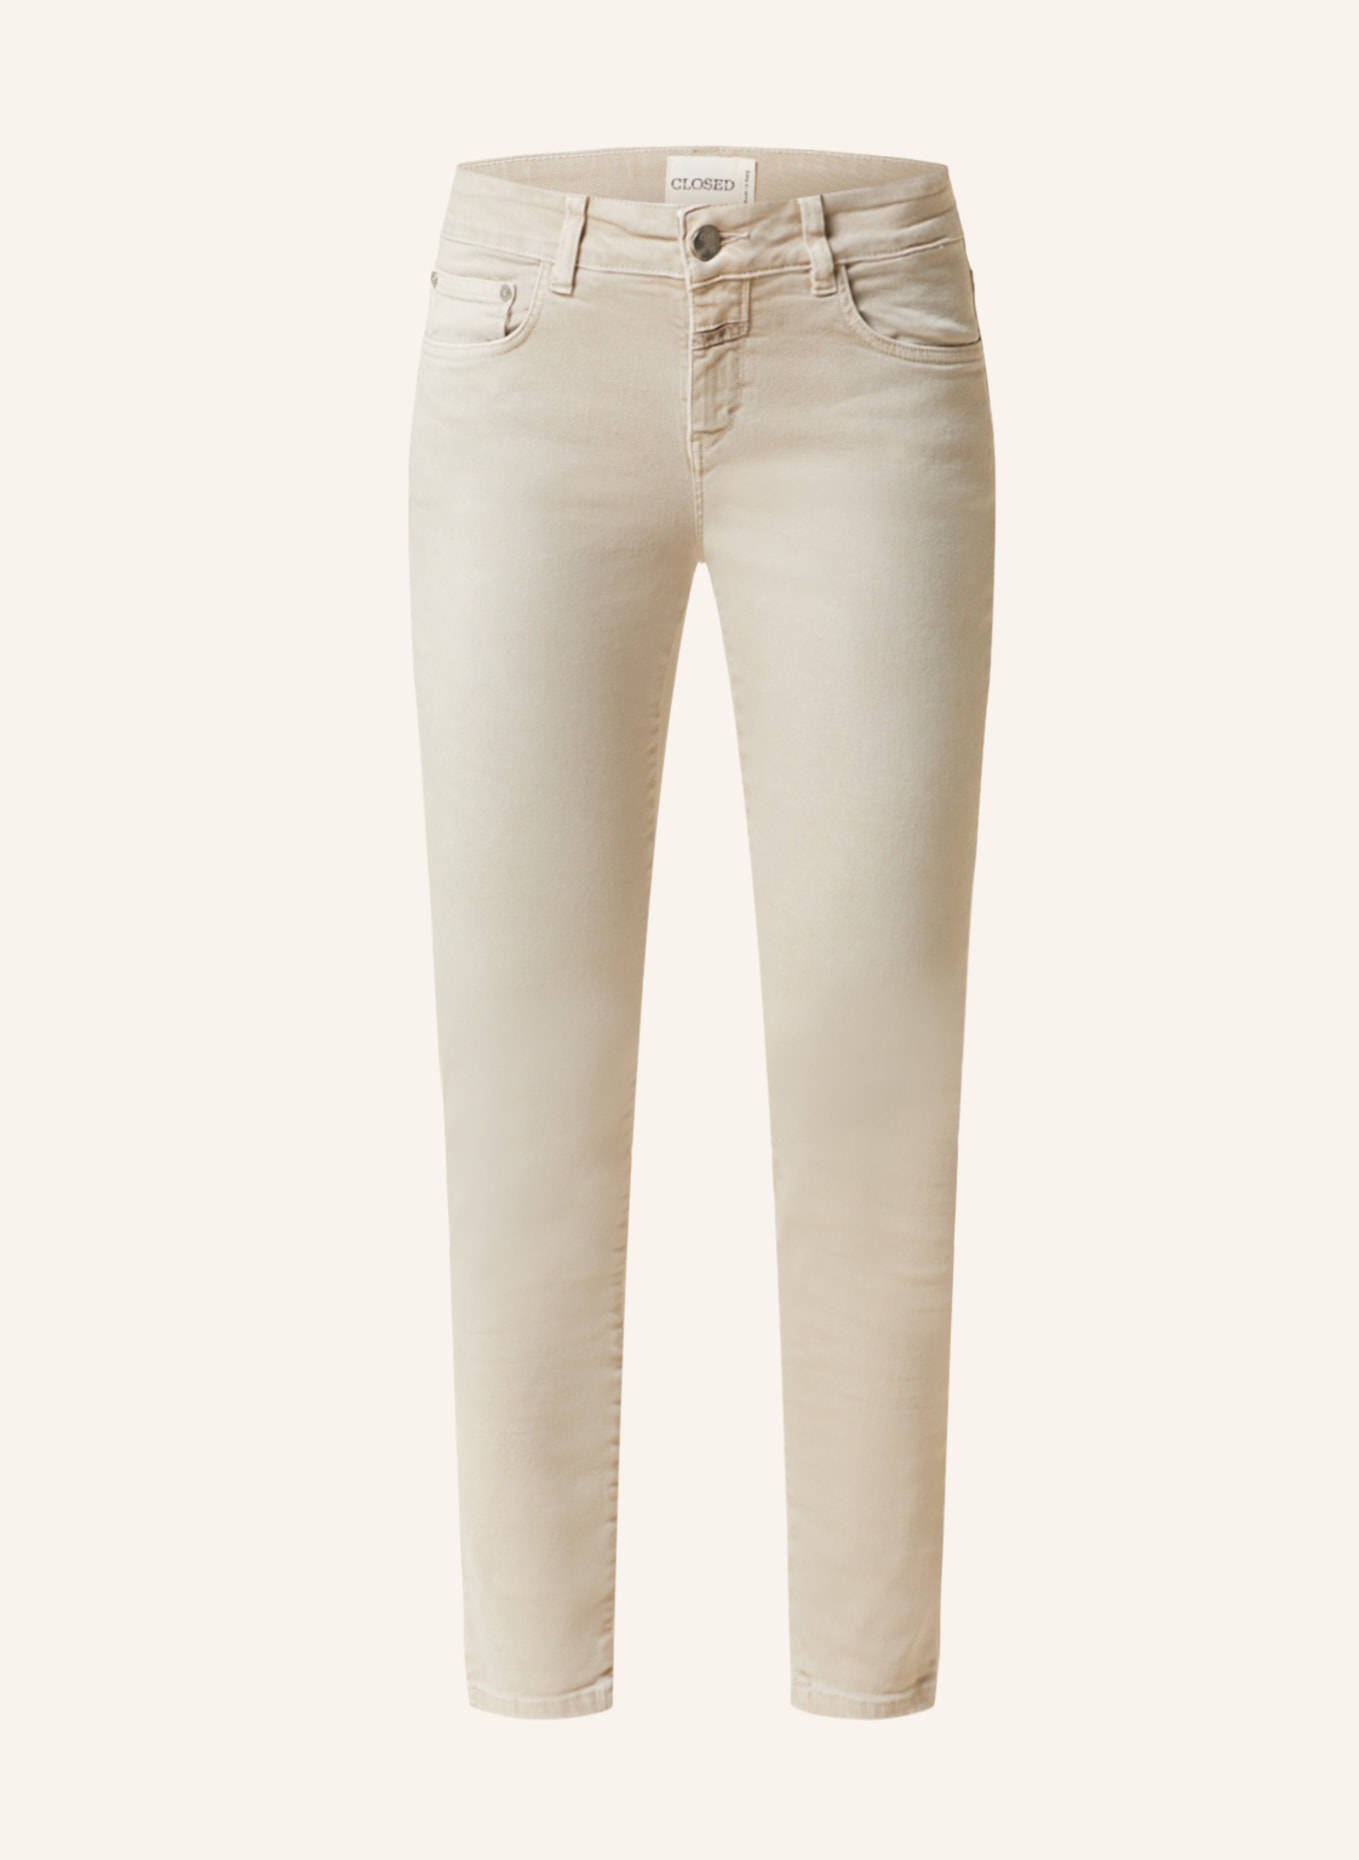 CLOSED Skinny Jeans BAKER , Farbe: 943 PLASTER BEIGE (Bild 1)